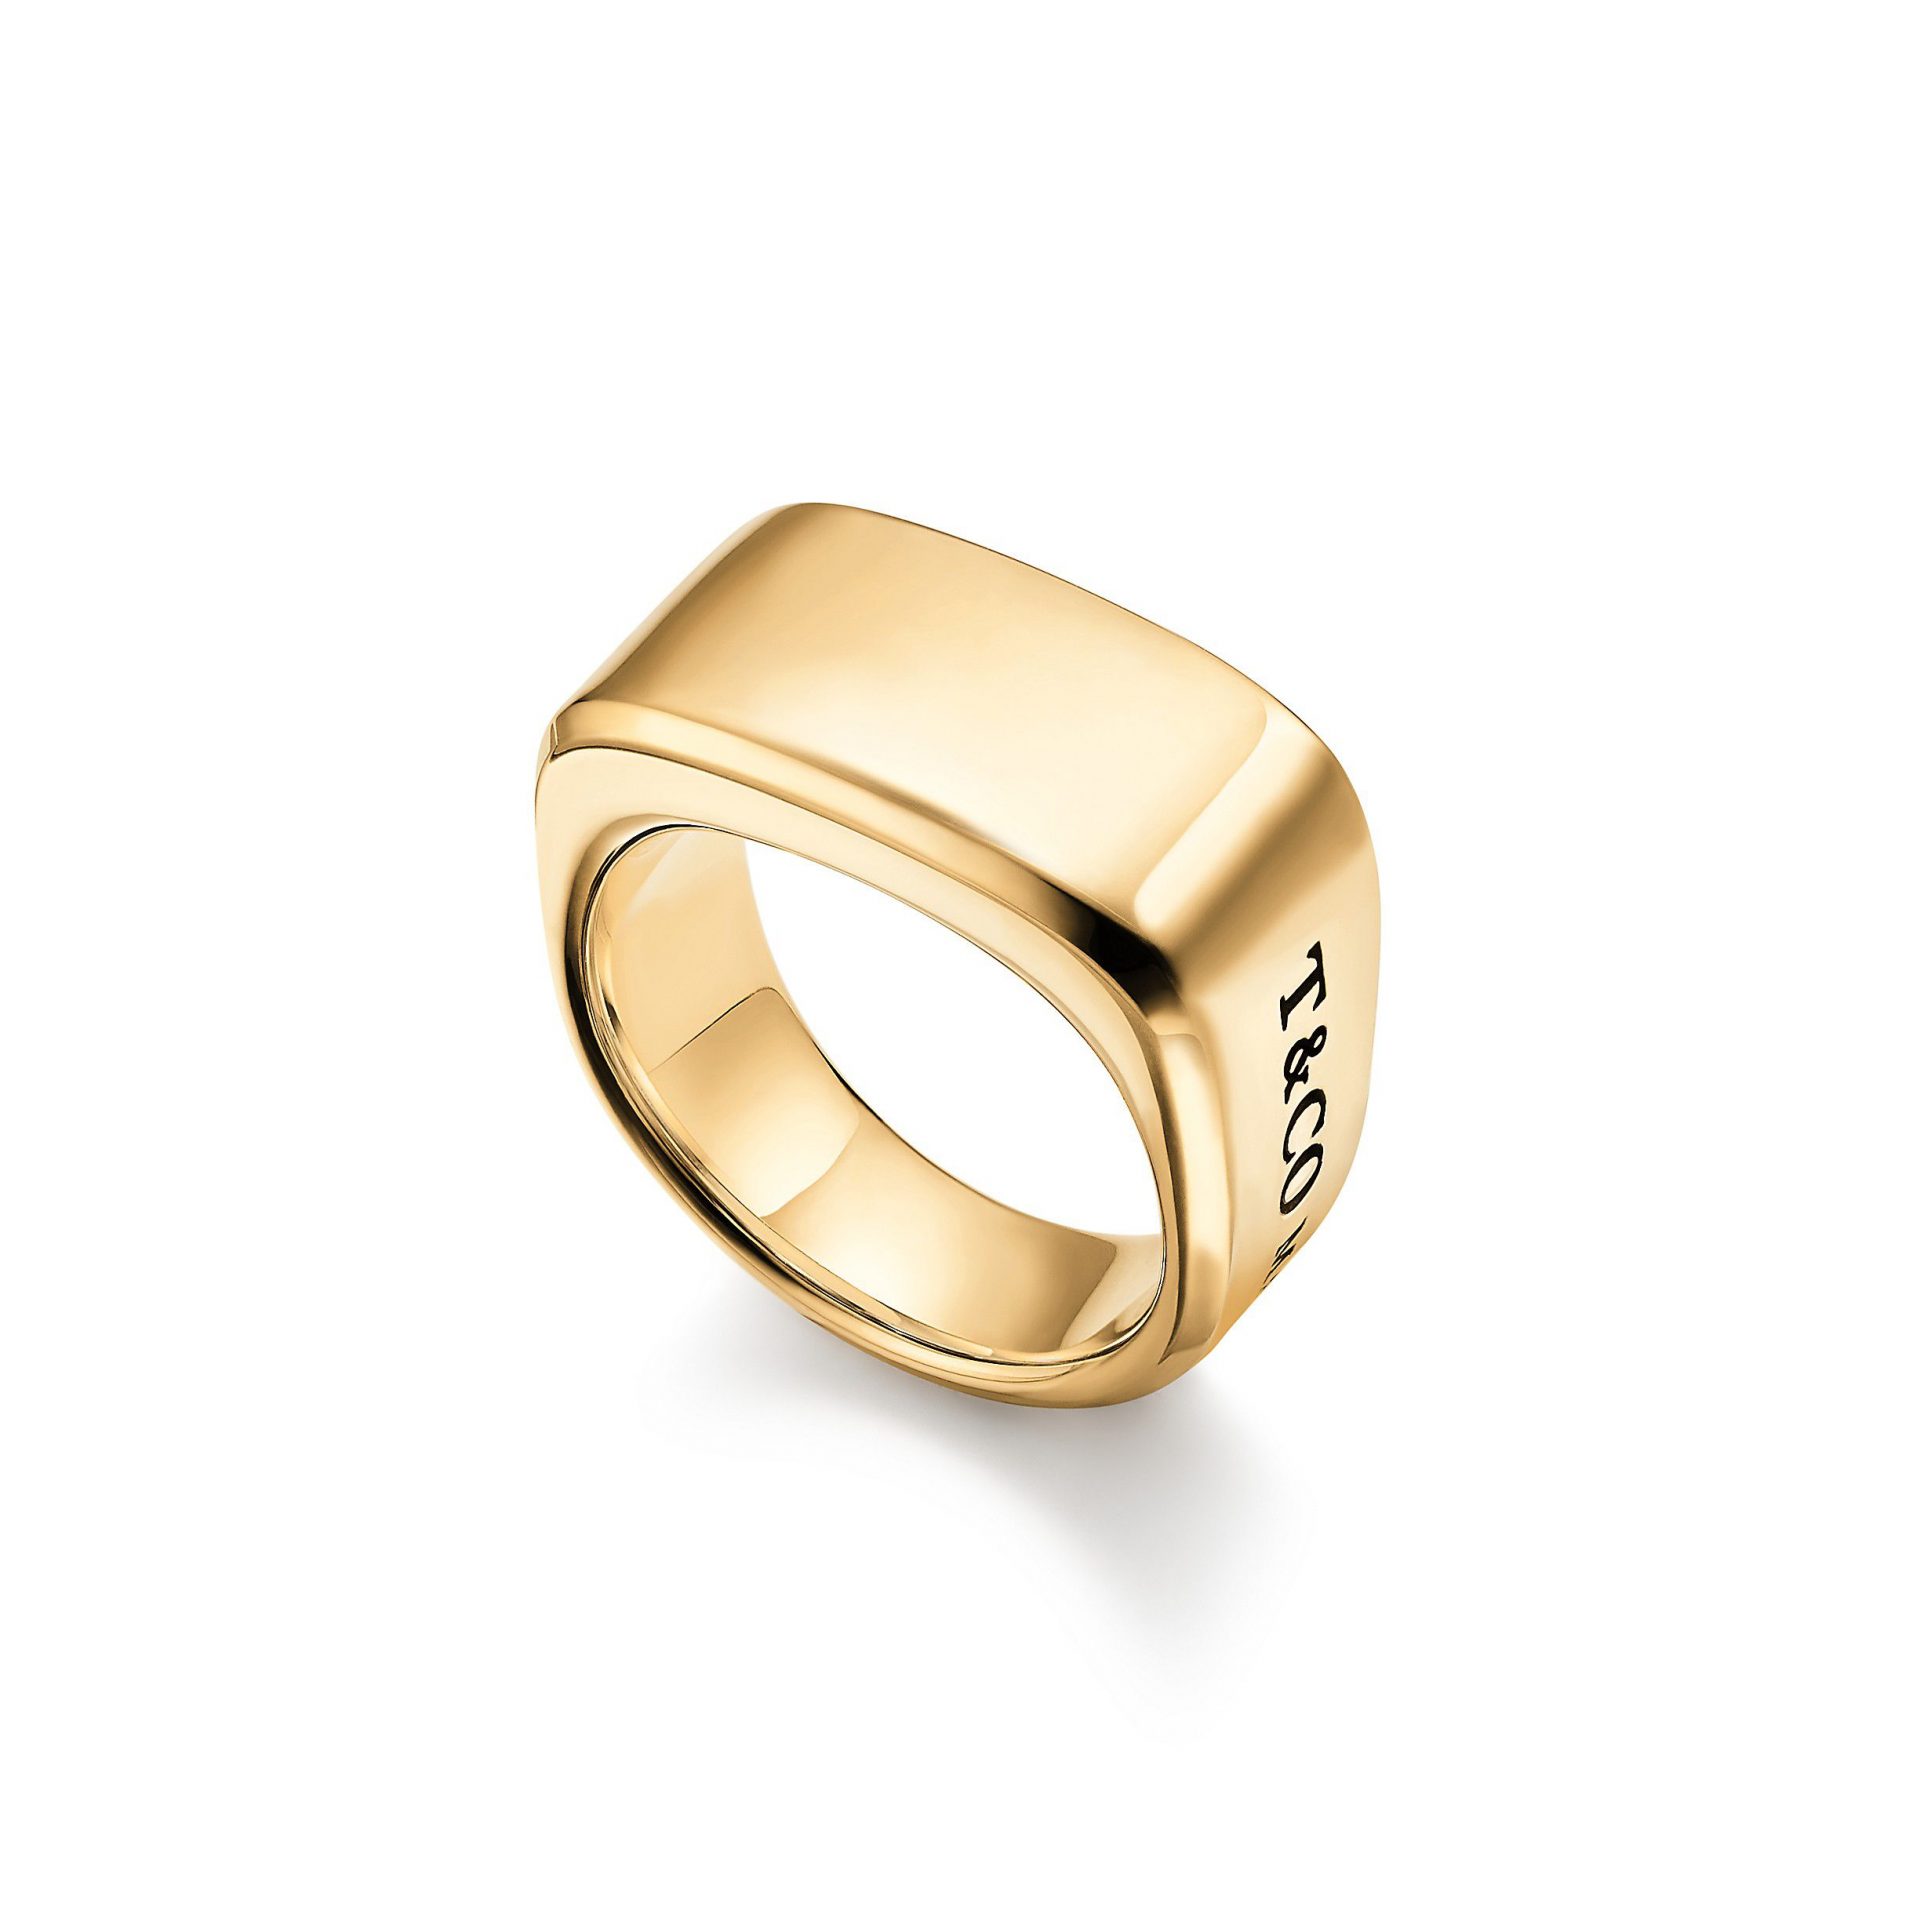 gold Tiffany & Co. signet ring